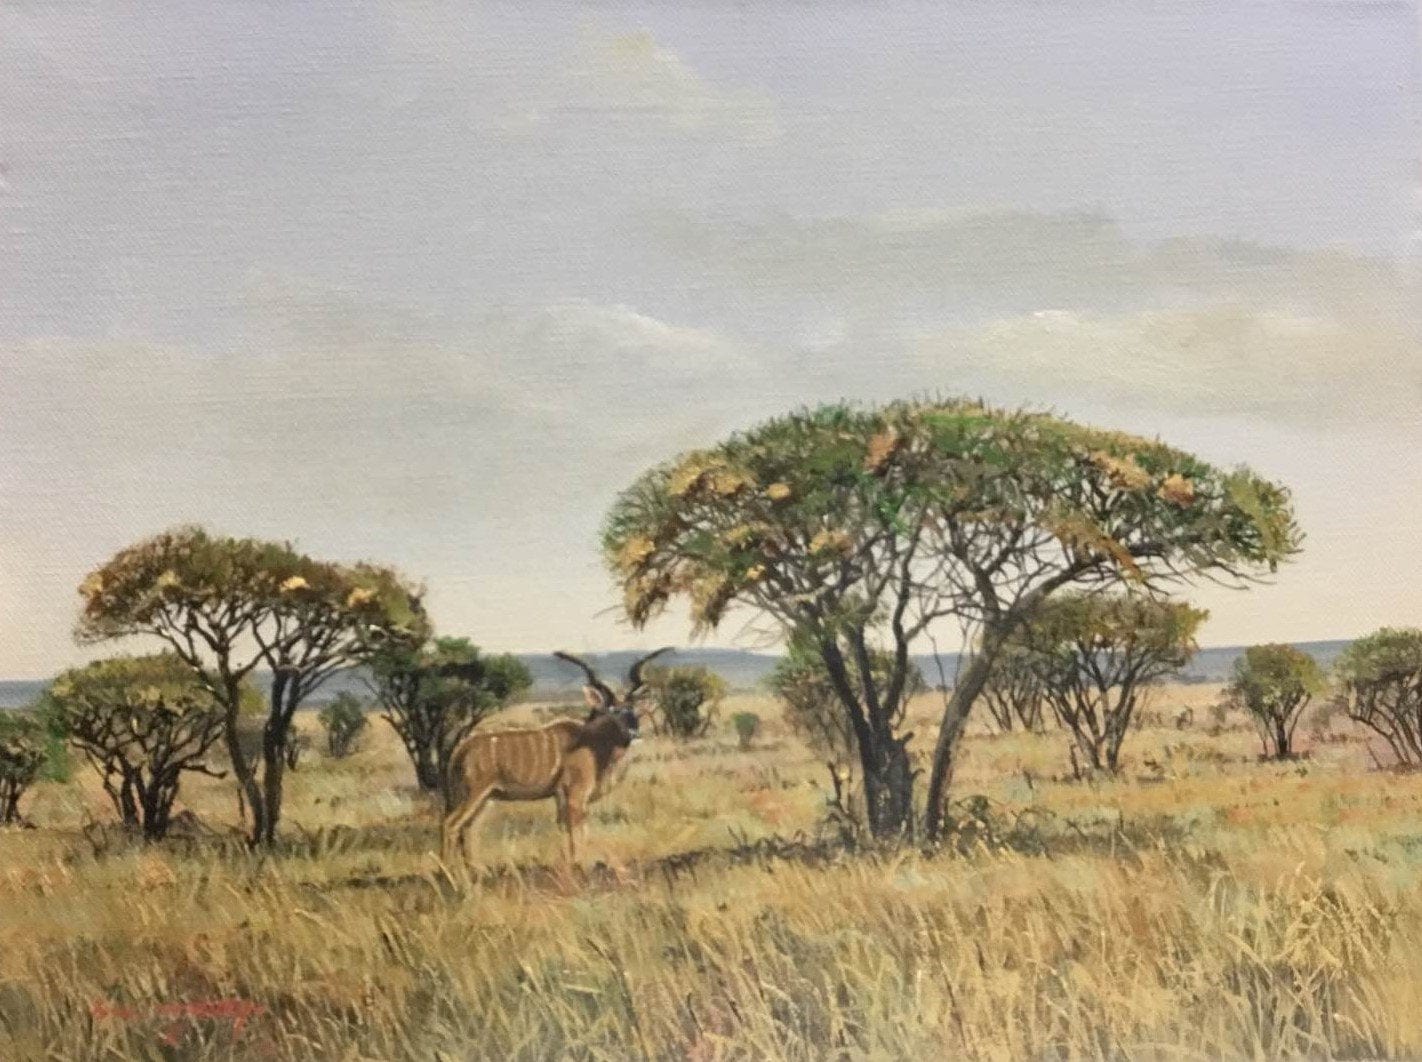 Kudu in the Bushveld